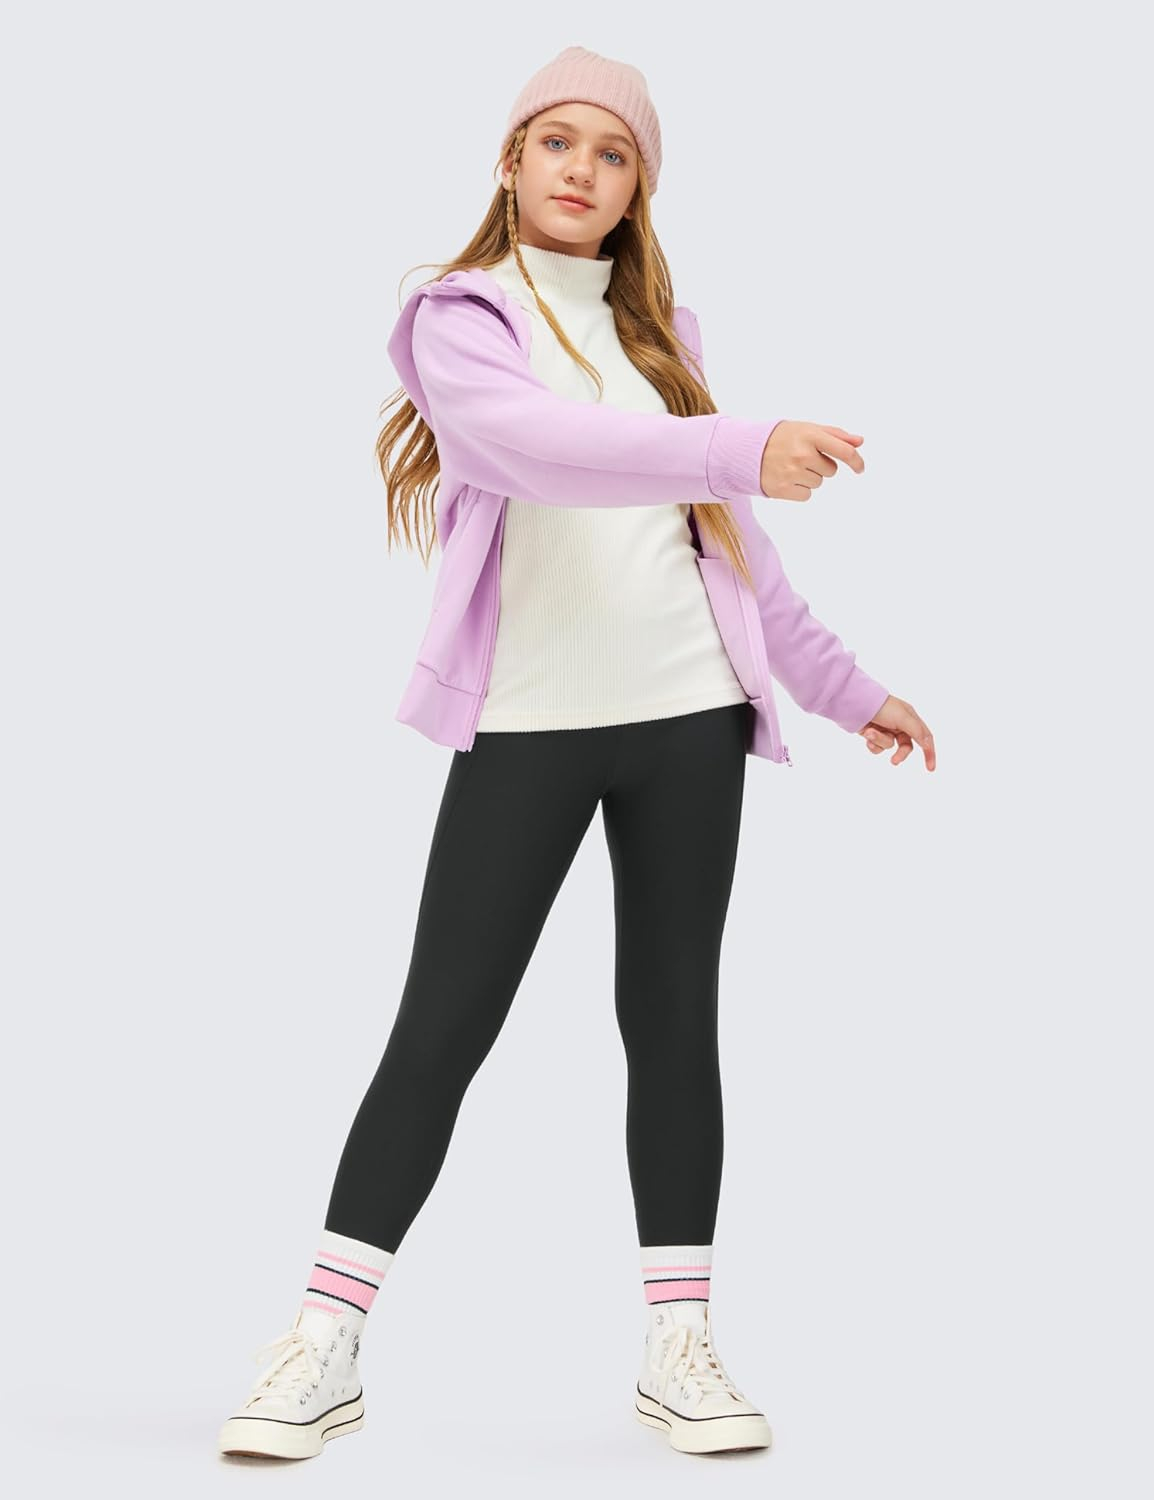 CRZ YOGA Girls Thermal Fleece Lined Athletic Leggings Water Resistant High Waist Warm Winter Kids Lounge Pants Side Pockets